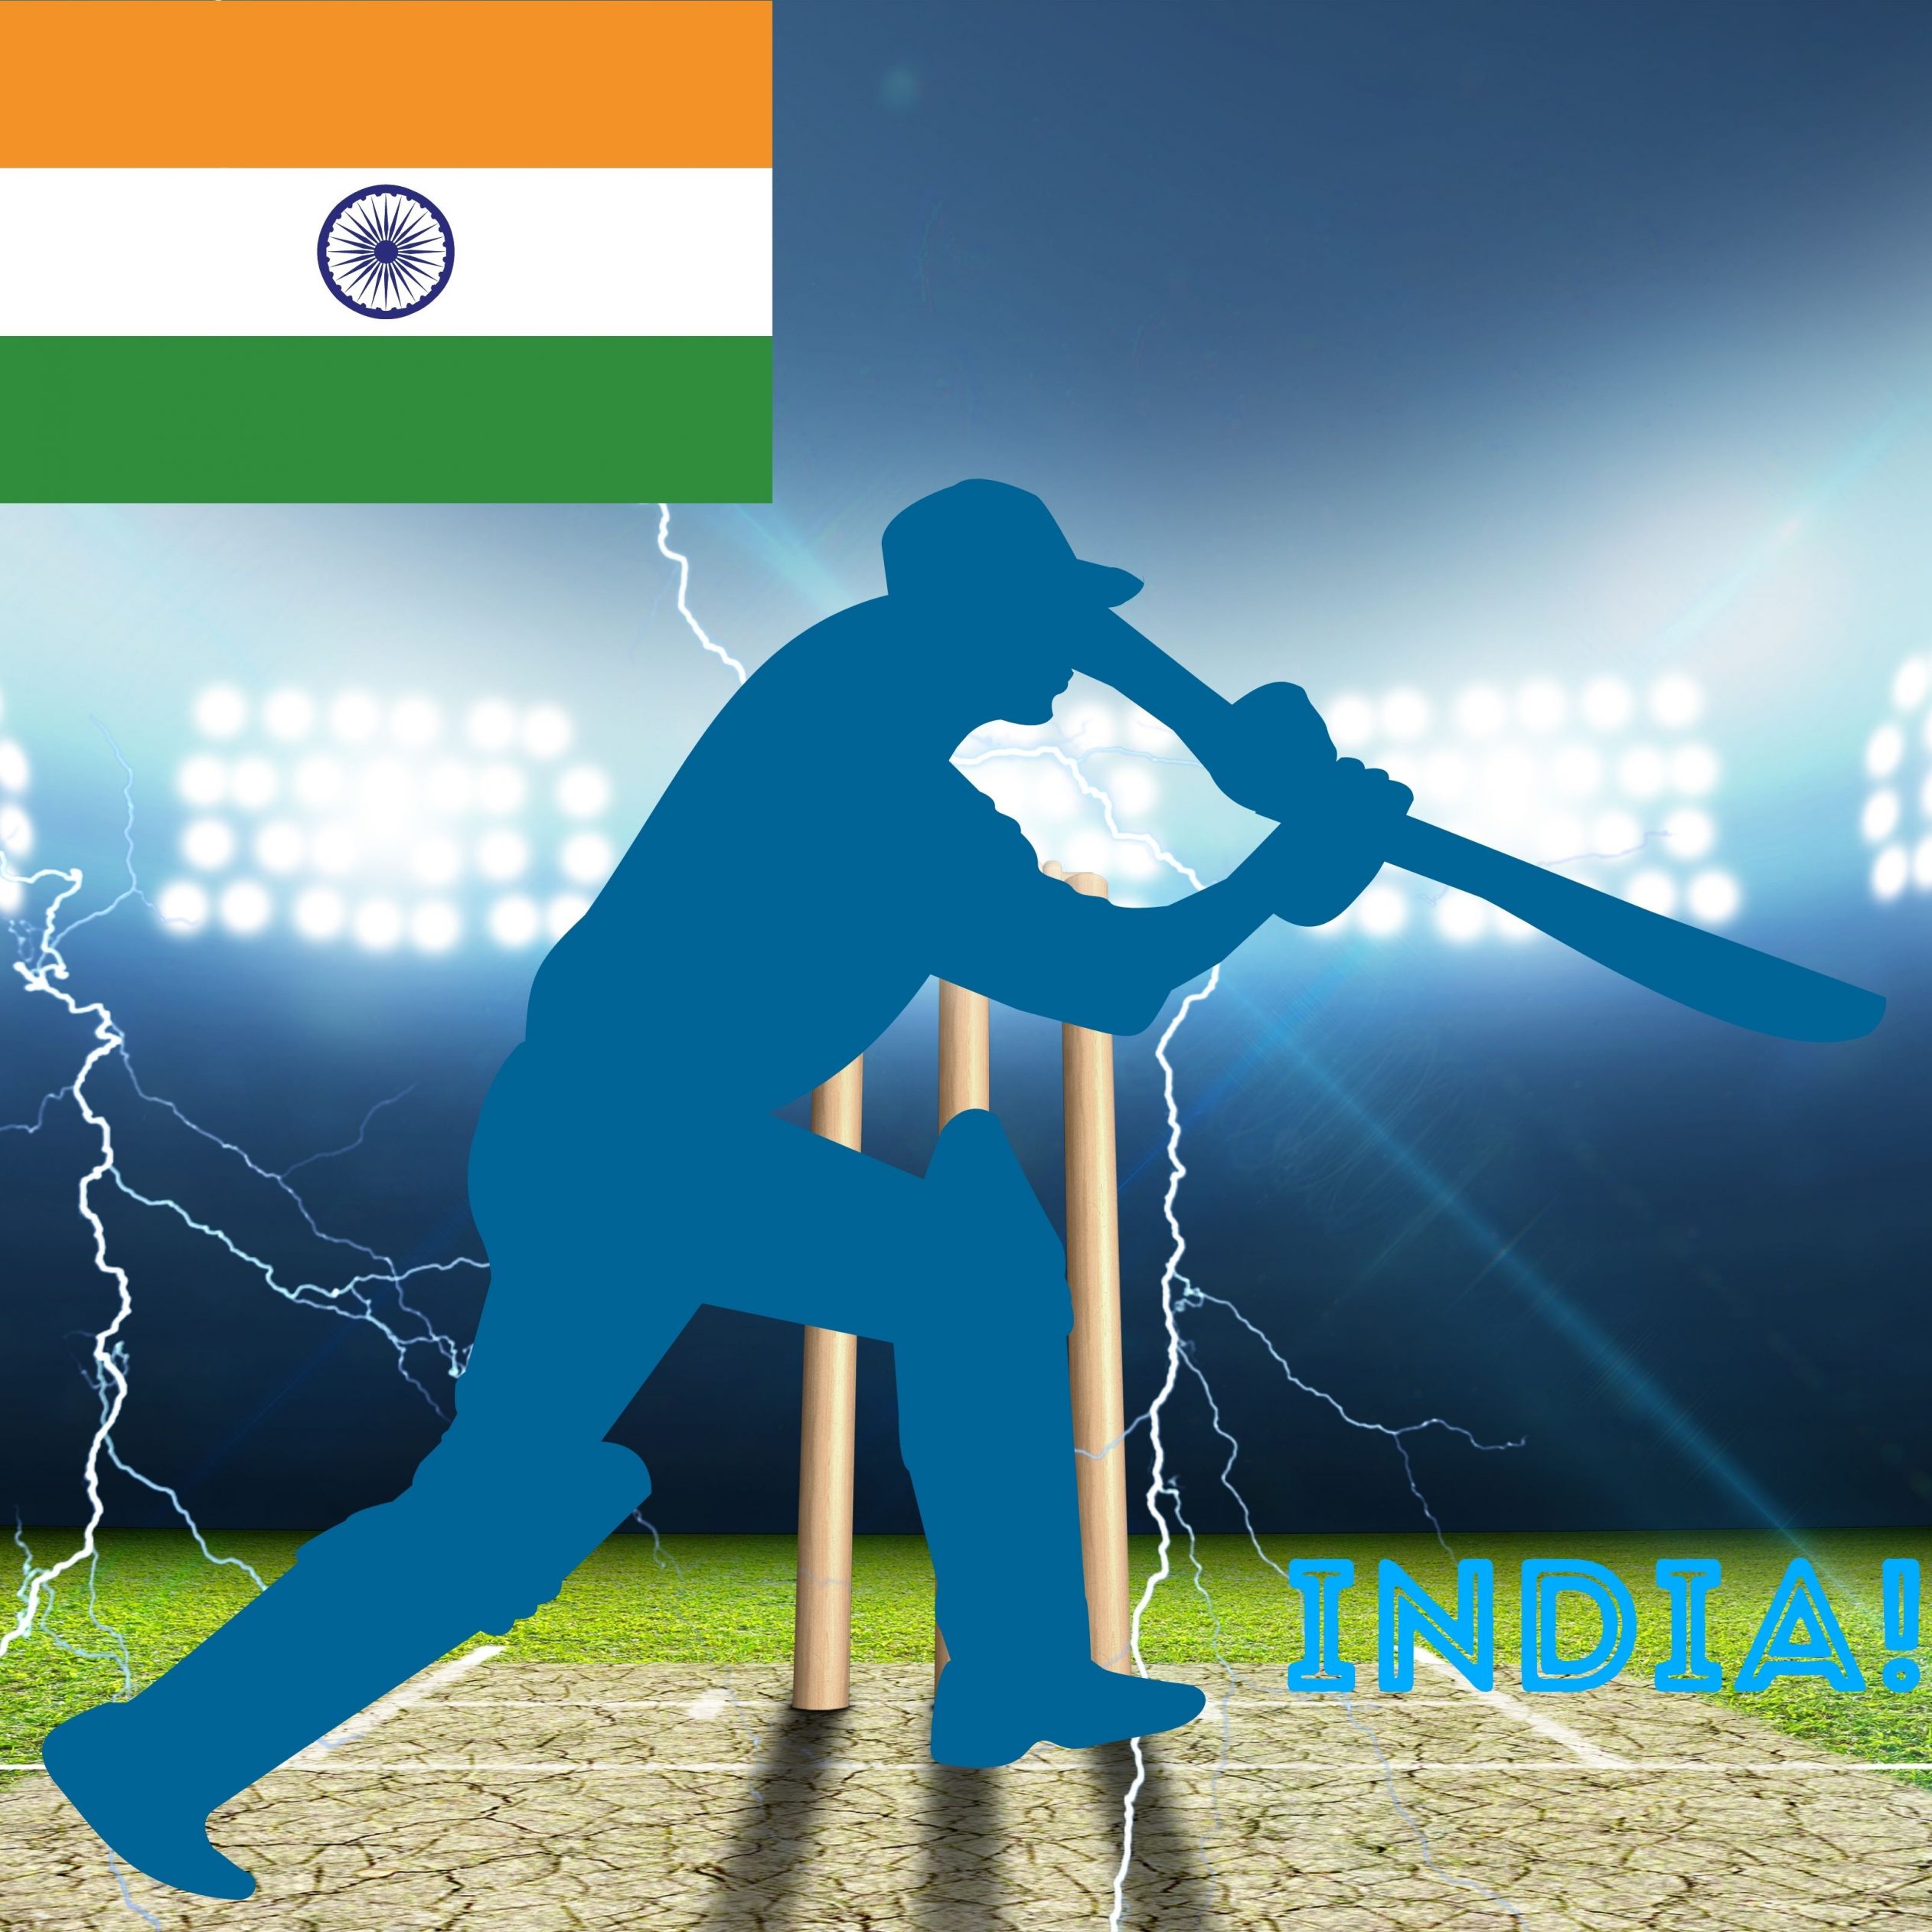 2524x2524 Parallax wallpaper 4k India Cricket Stadium iPad Wallpaper 2524x2524 pixels resolution